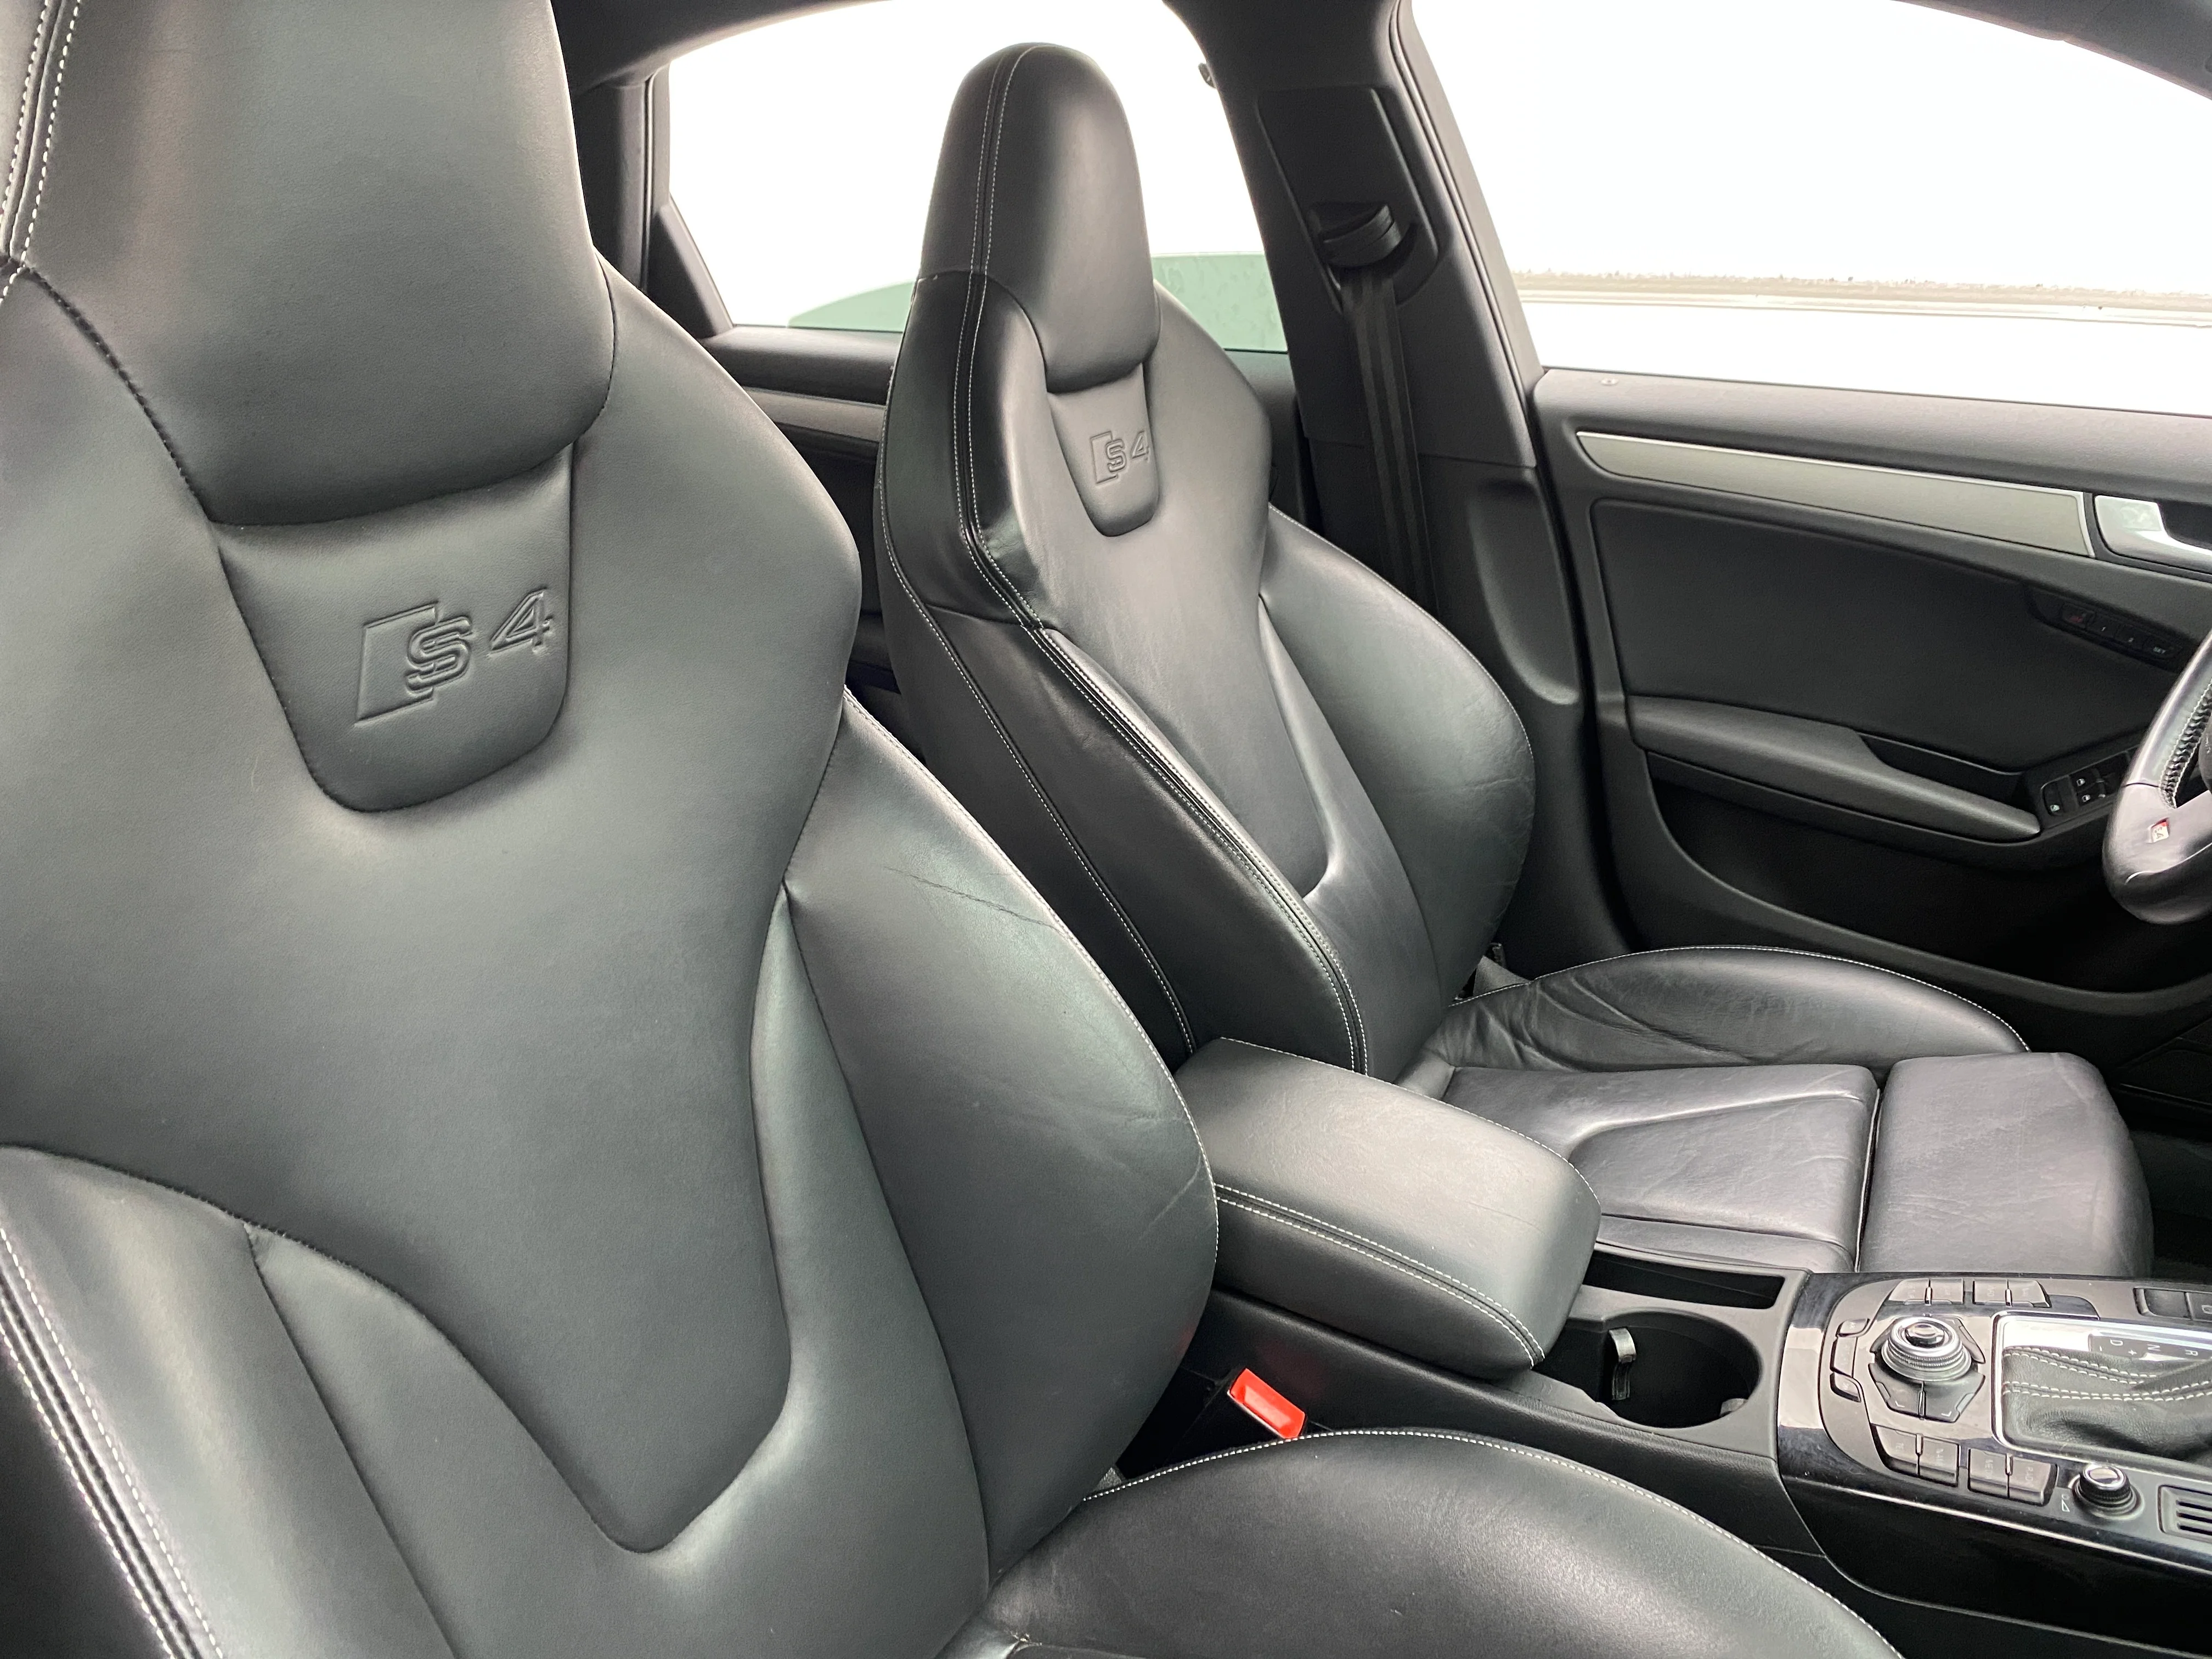 Audi S4 interior - Seats